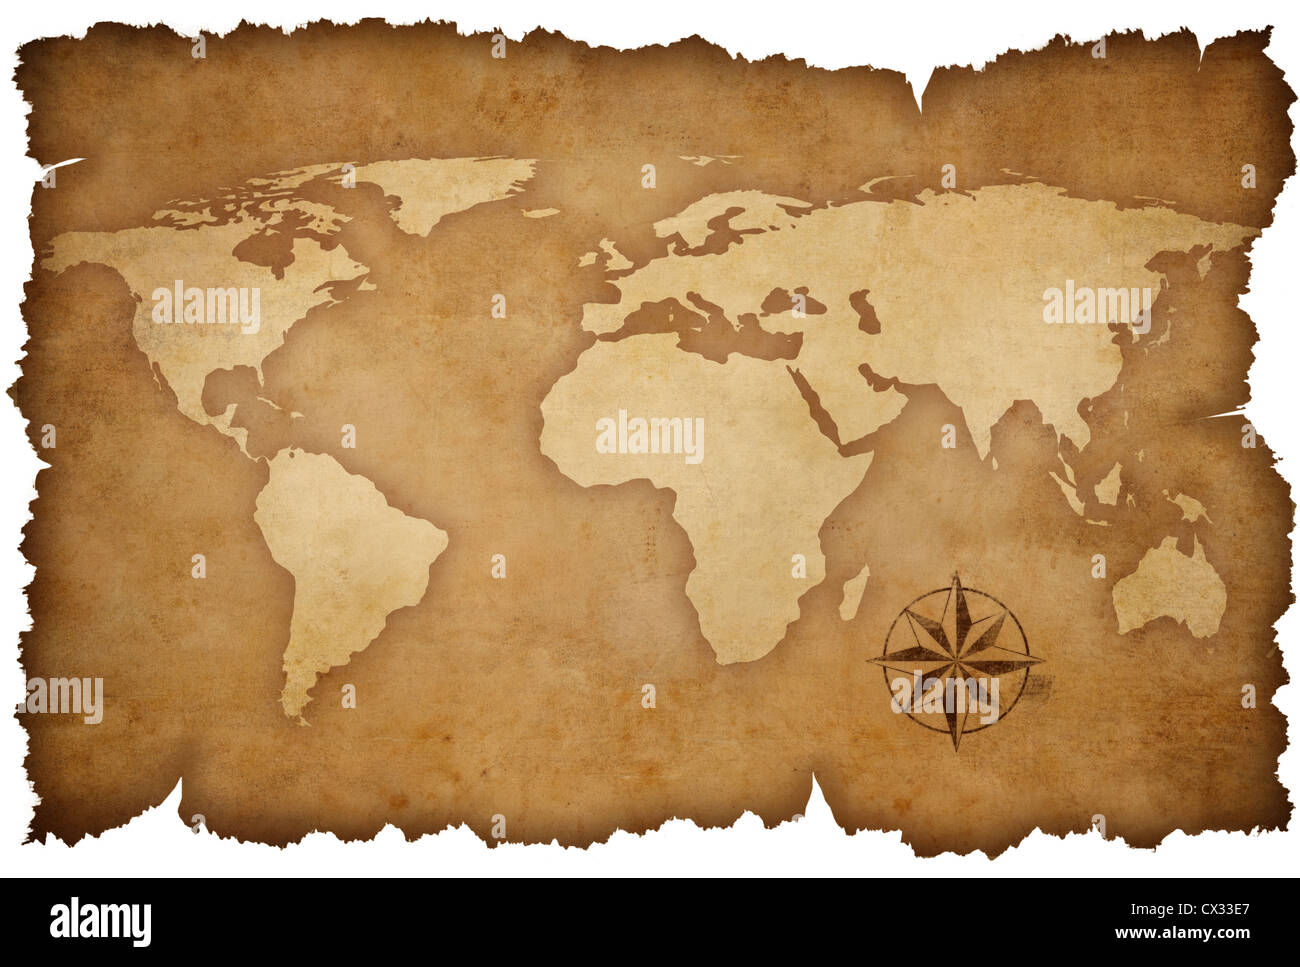 Carte du monde grunge background avec compass rose Banque D'Images